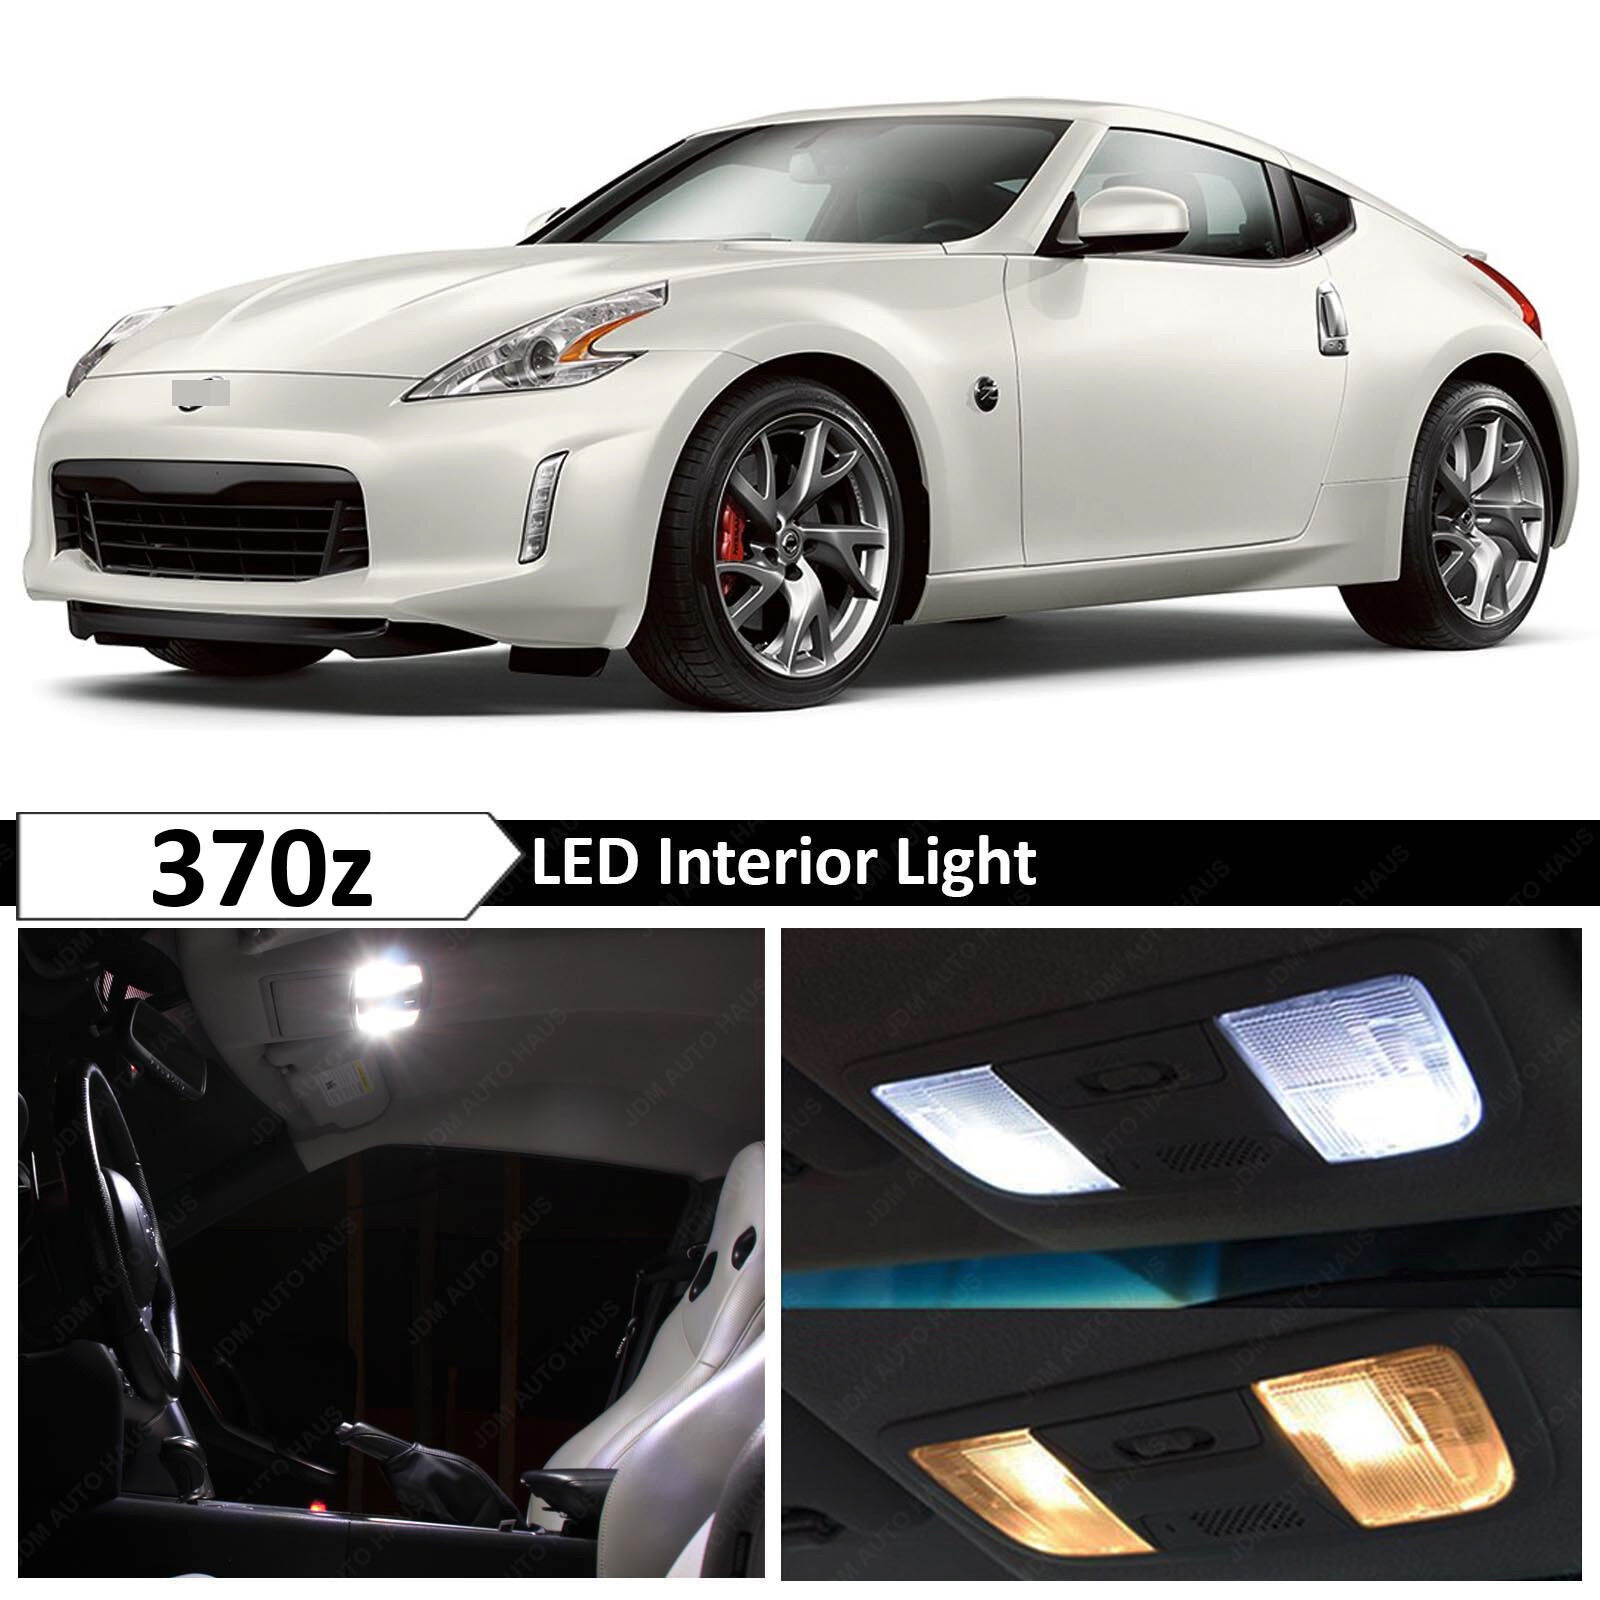 10x White Interior License Plate LED Light Package Kit Fit 2009-2016 Nissan 370z